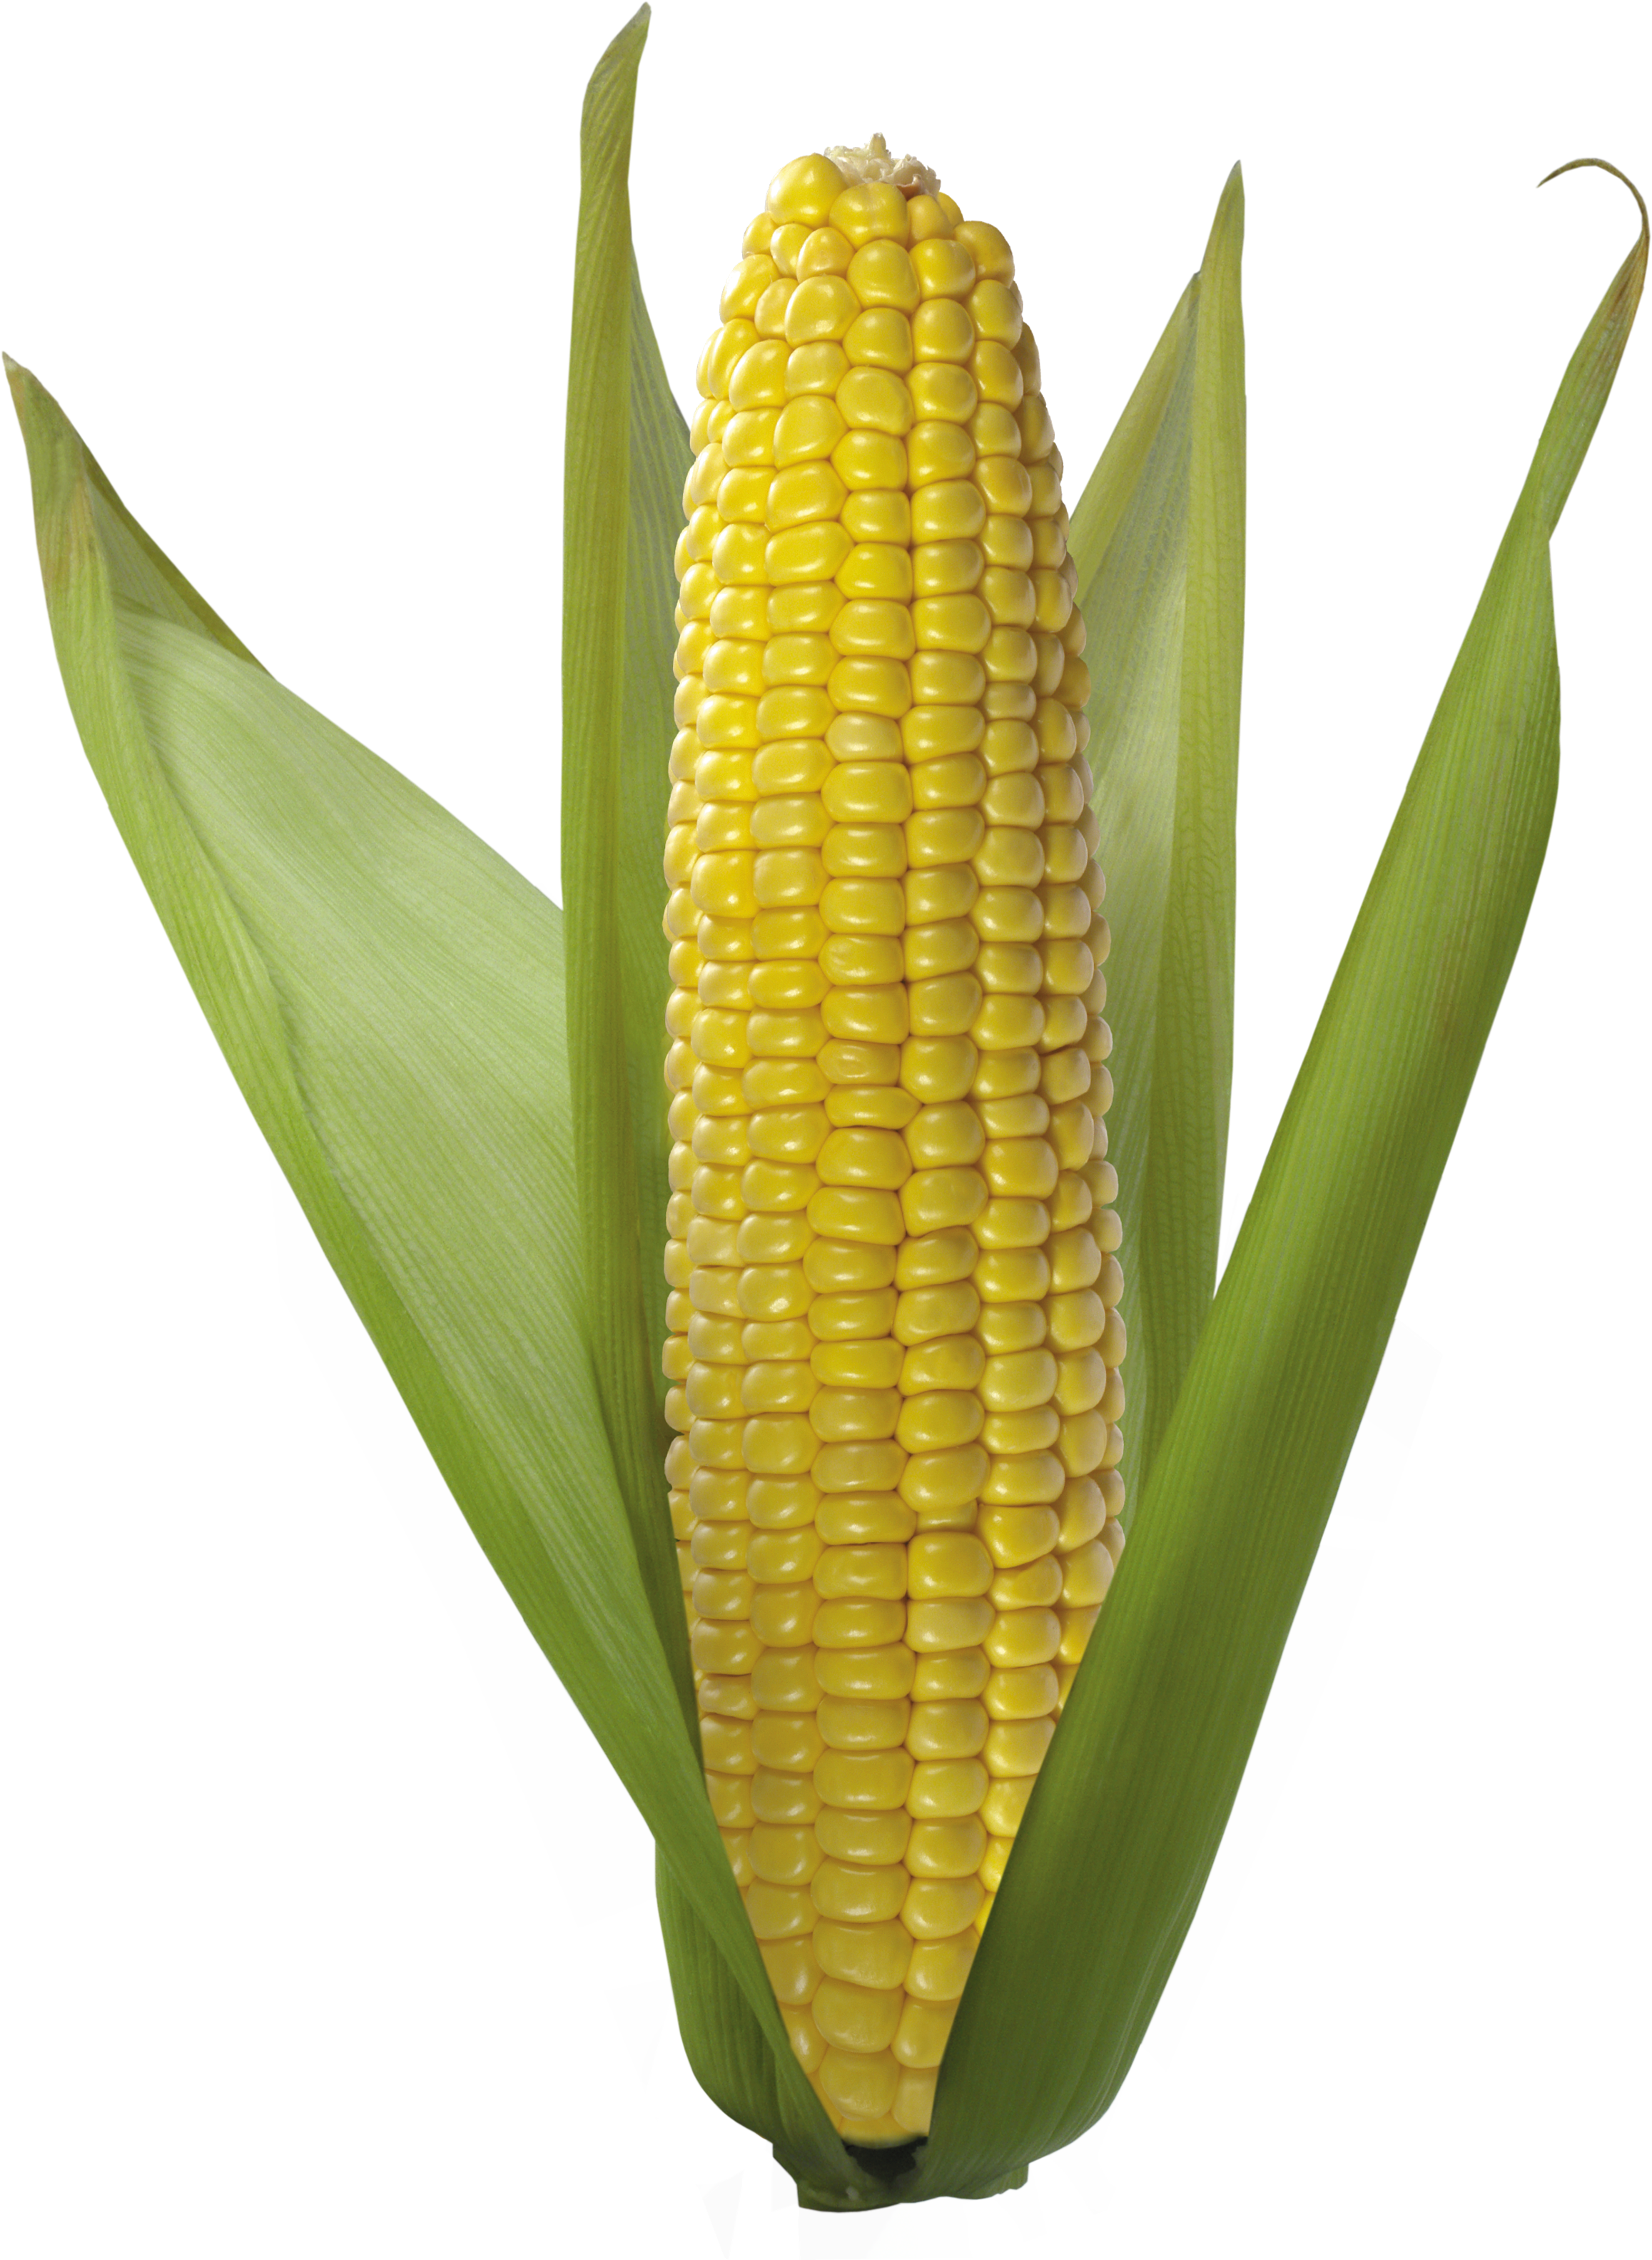 Corn Pics, Food Collection